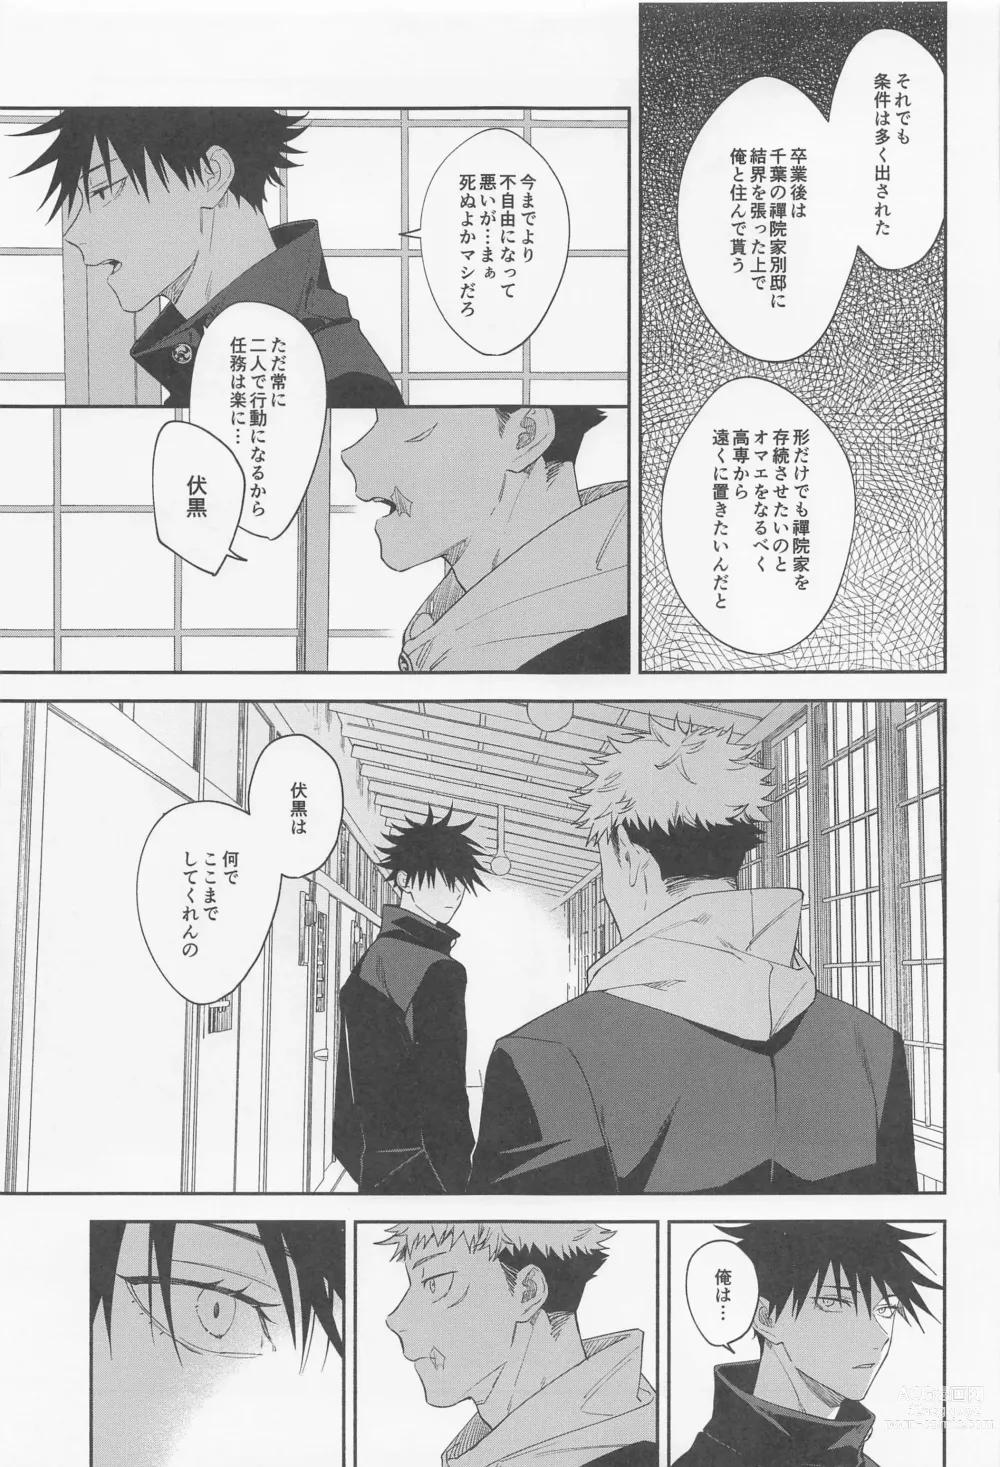 Page 10 of doujinshi Tasuketekure to Itte Kure - I need you to ask for help.